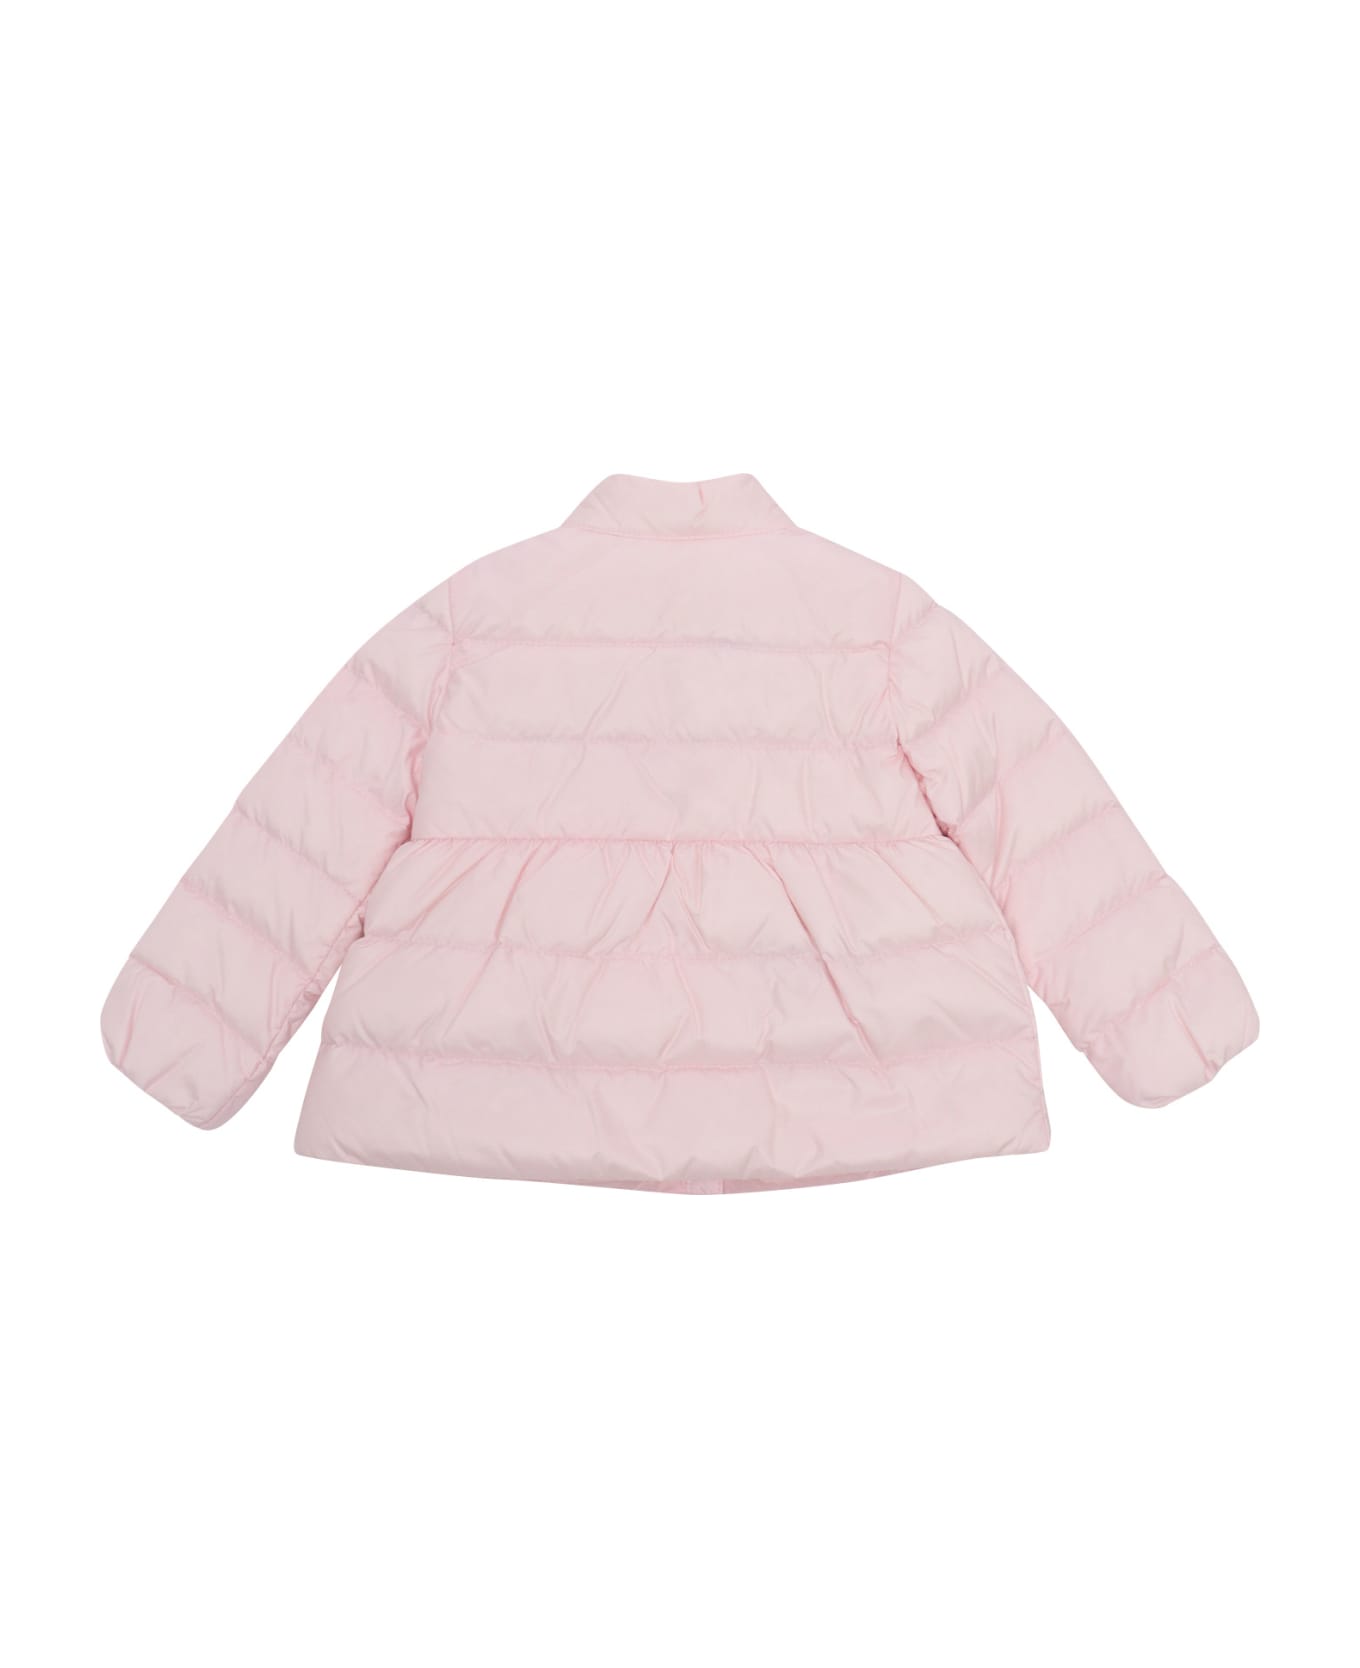 Moncler Joelle Pink Down Jacket - PINK